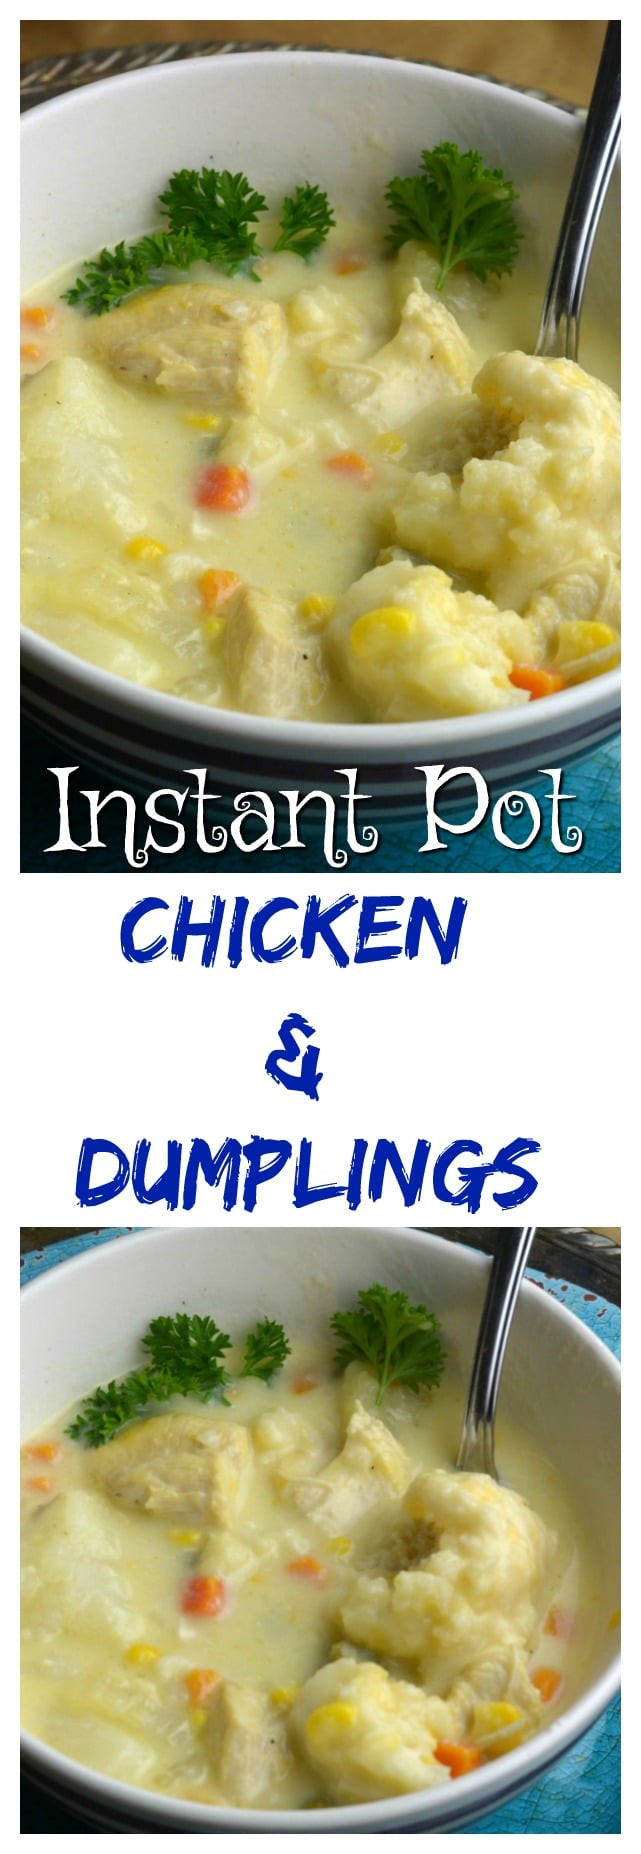 Microwave Chicken And Dumplings
 Instant Pot Chicken and Dumplings Adventures of a Nurse